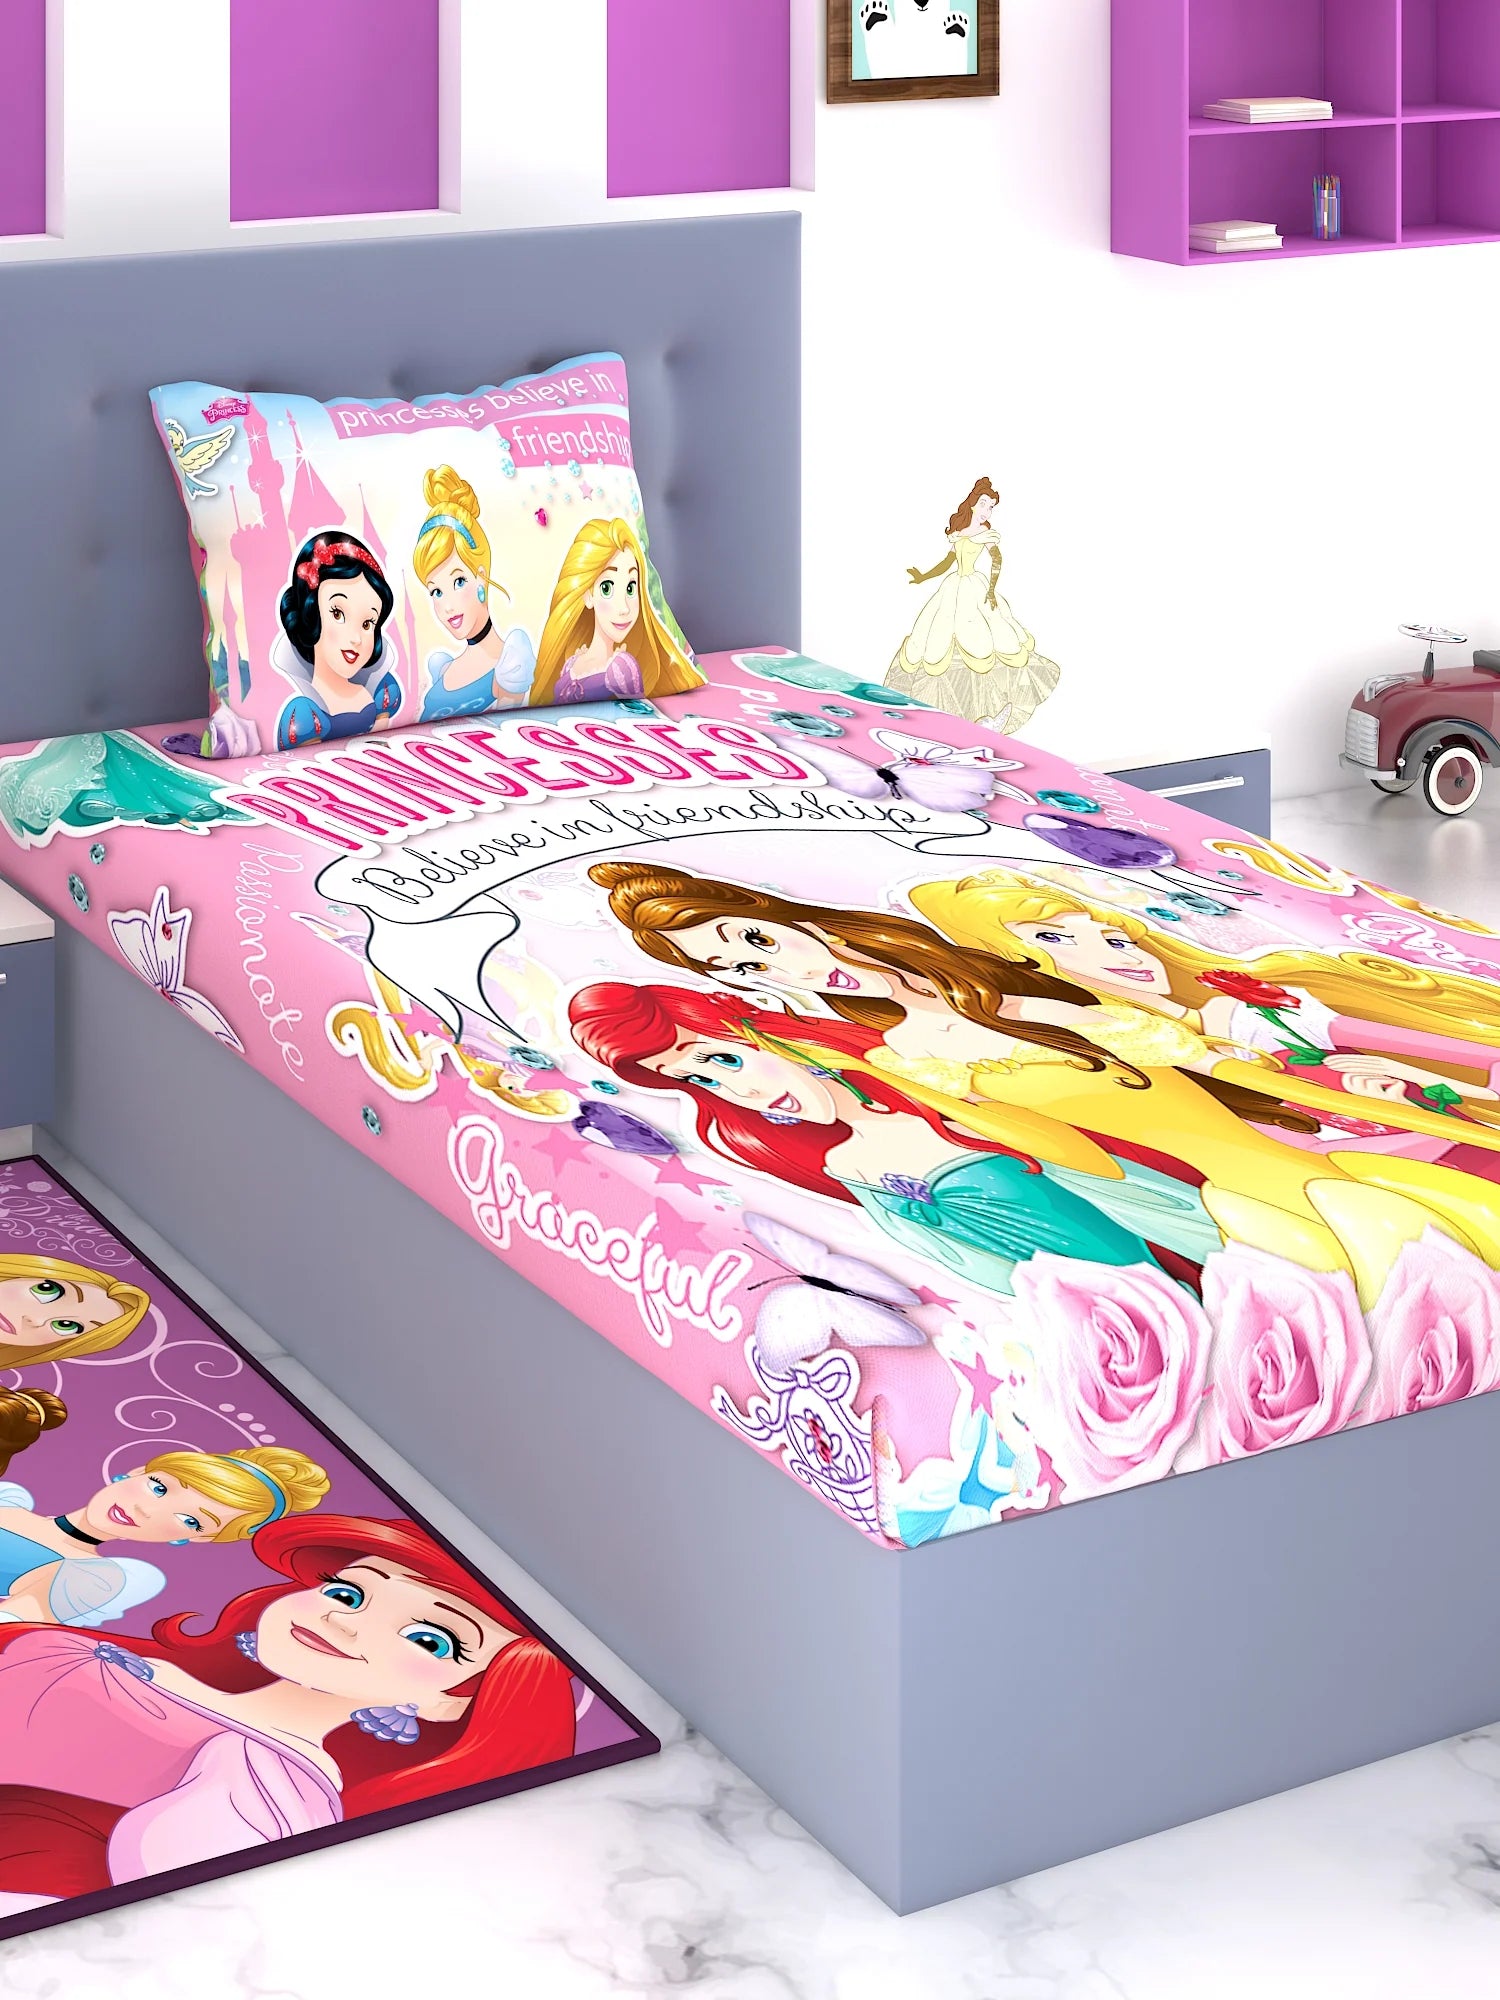 Disney Princess Believe In Friendship Cotton Single Bedsheet Set